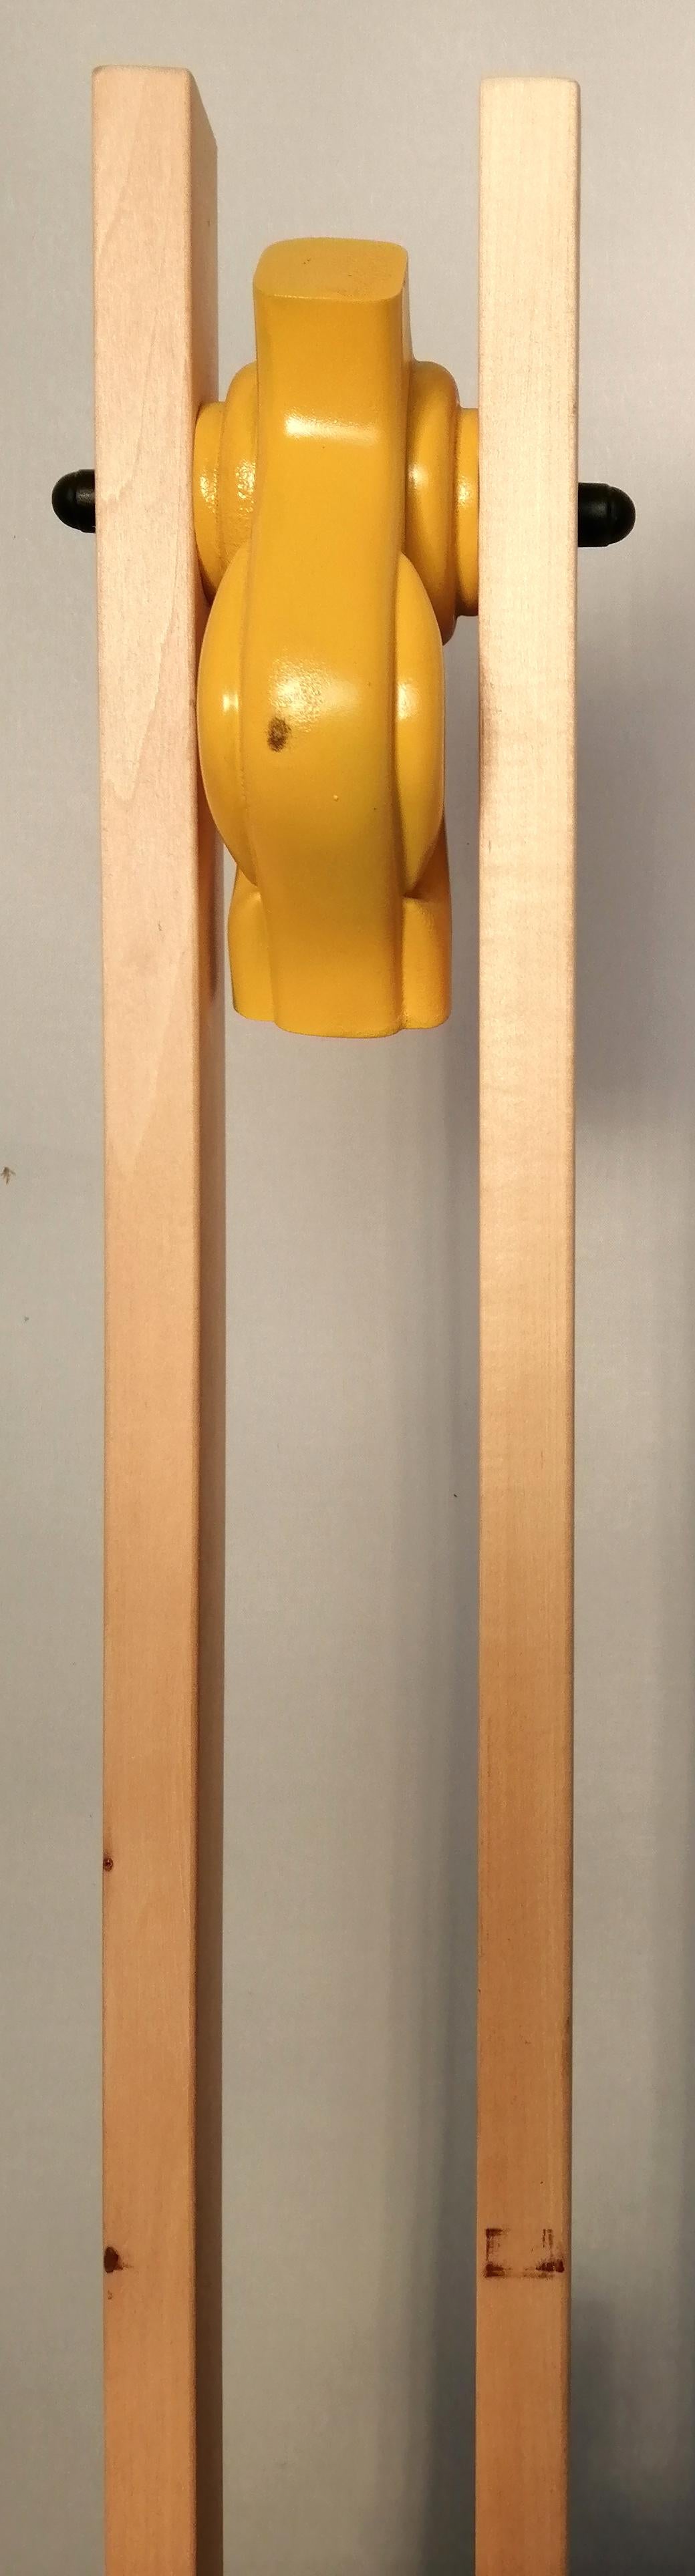 Konstruktionstechnik: Buchenholzstruktur mit gelbem Dekor
Farbe: Naturholz.
 